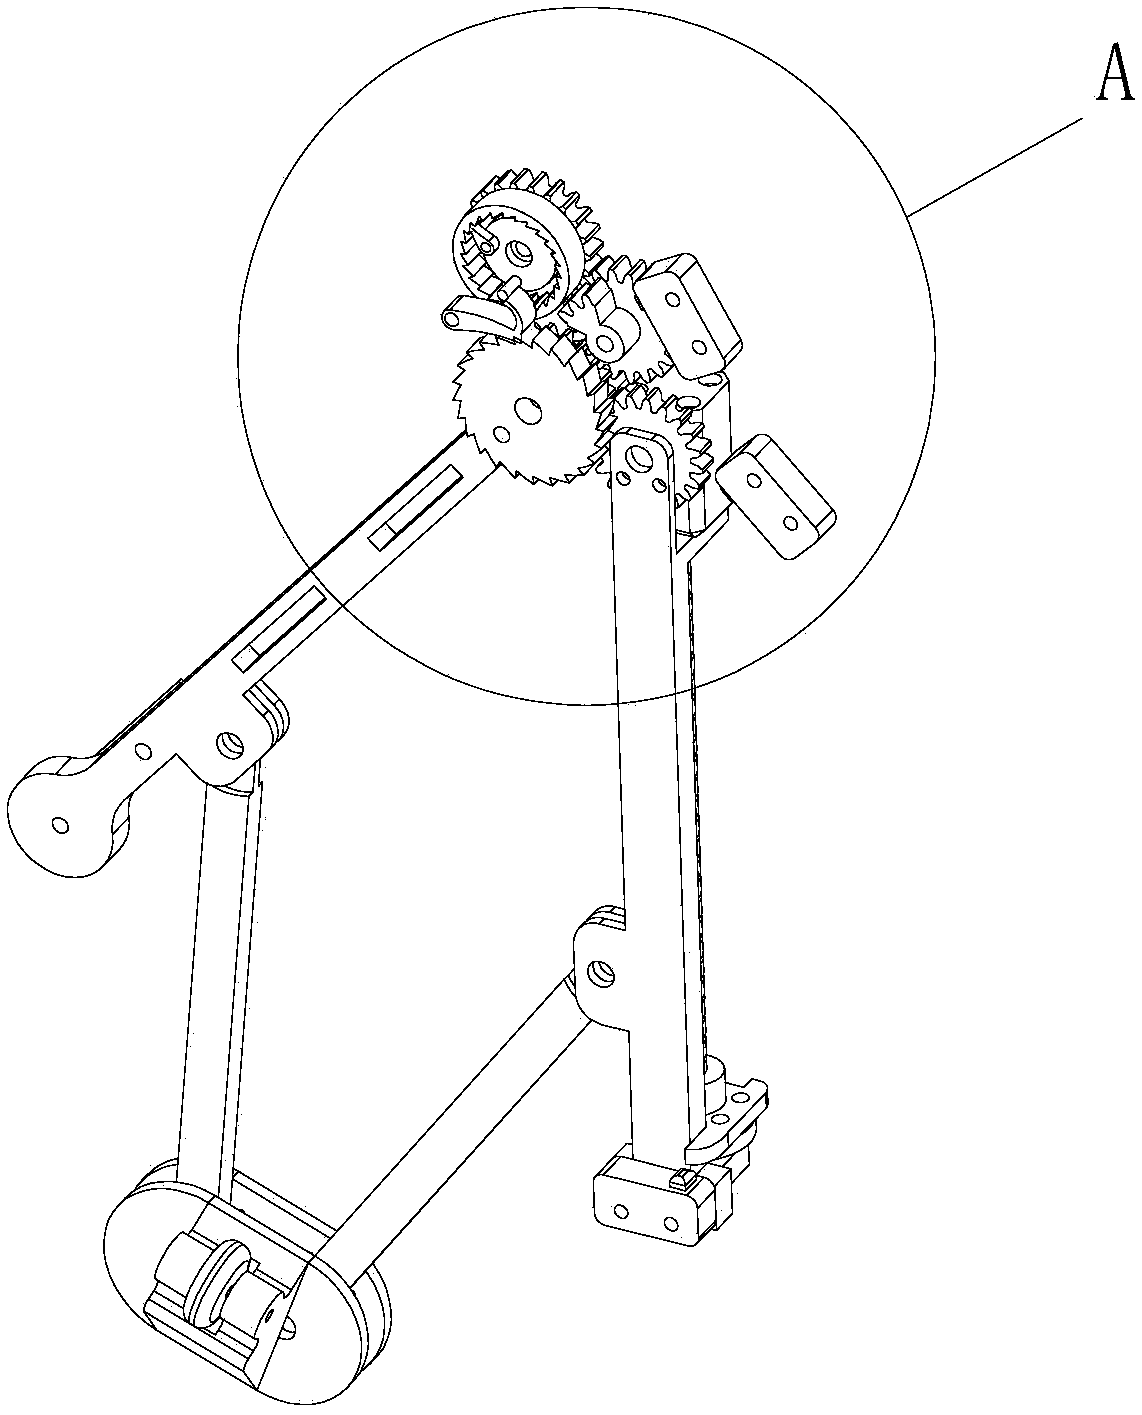 multi-link jumping mechanism